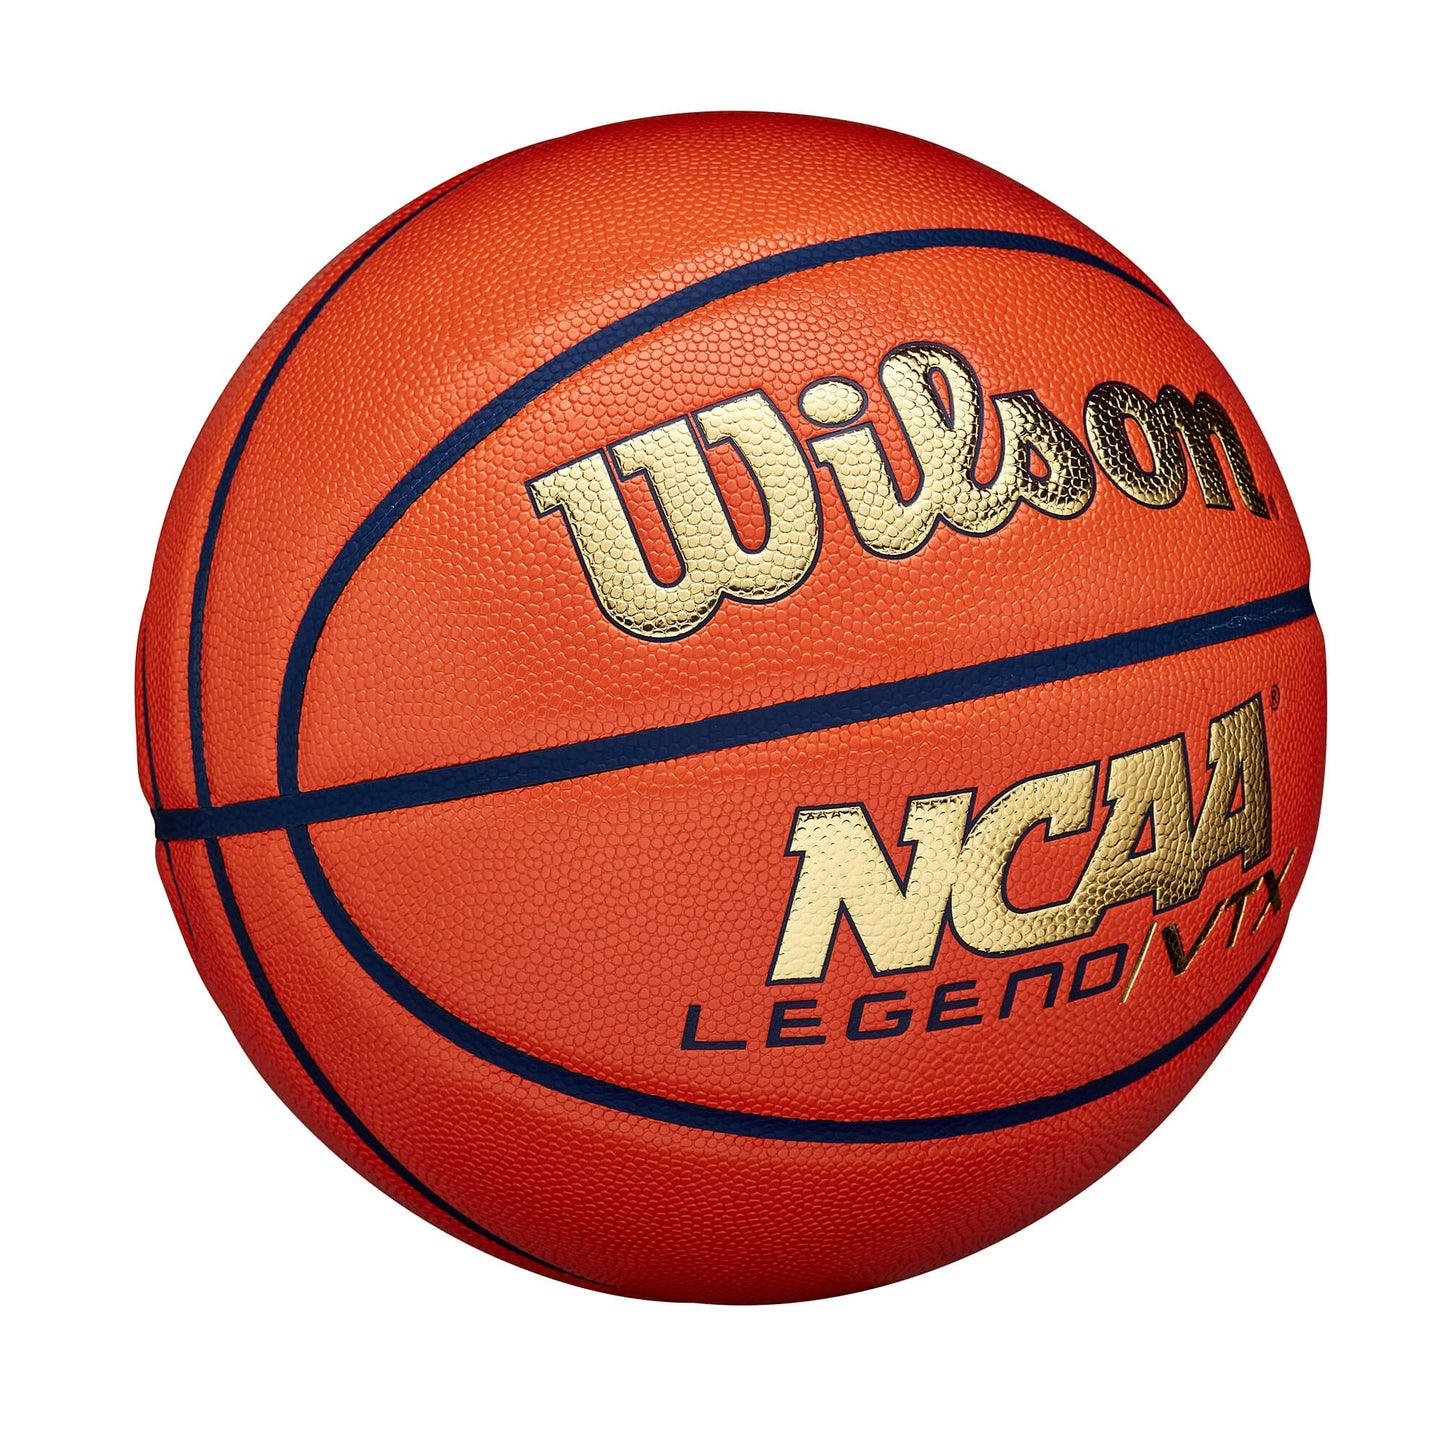 Wilson NCAA LEGEND VTX BSKT Orange/Gold (sz. 7)